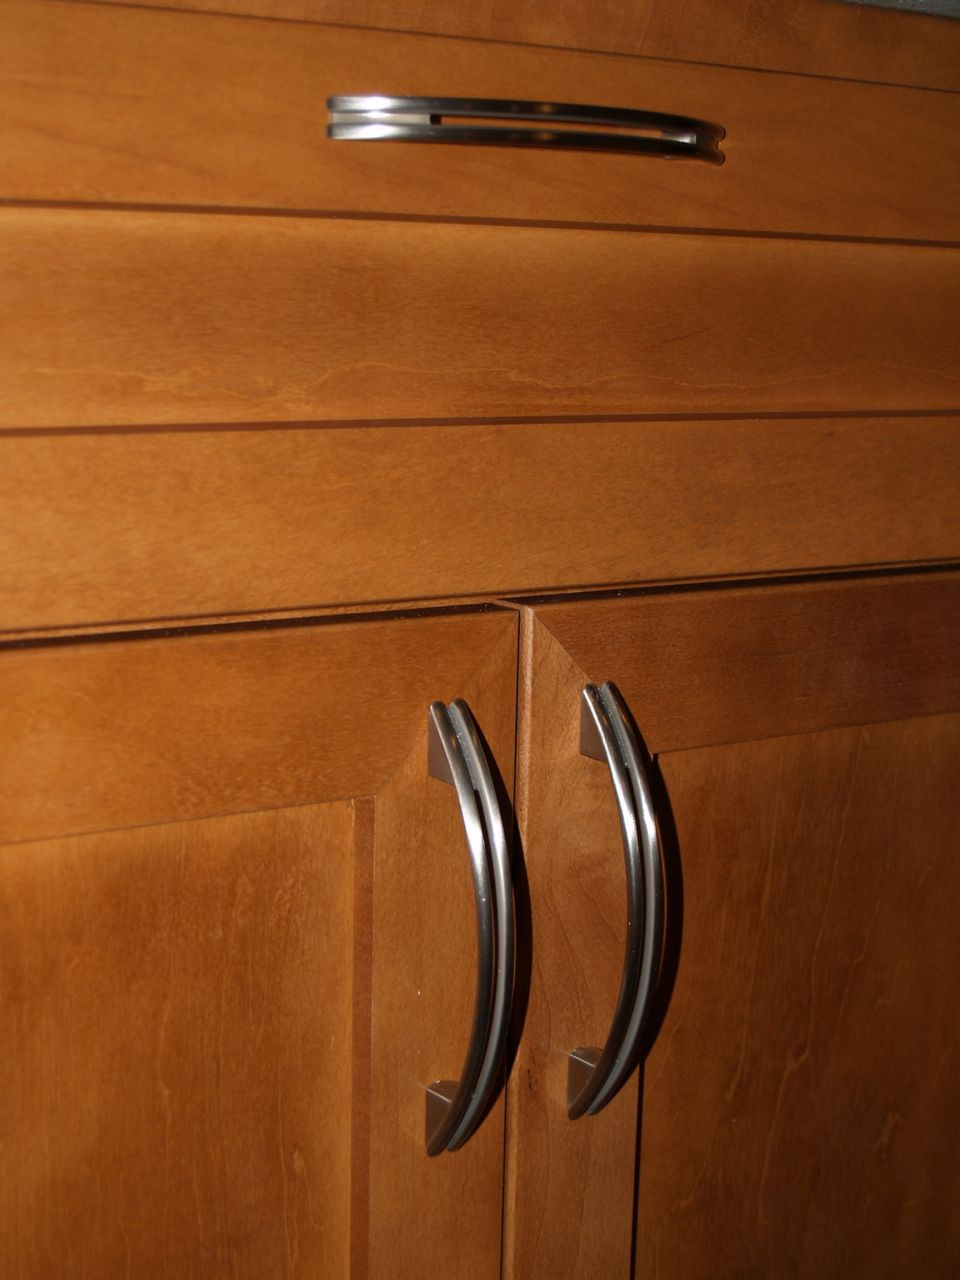 Best ideas about Kitchen Cabinets Handles
. Save or Pin Best Kitchen Cabinet Door Handles — The Homy Design Now.